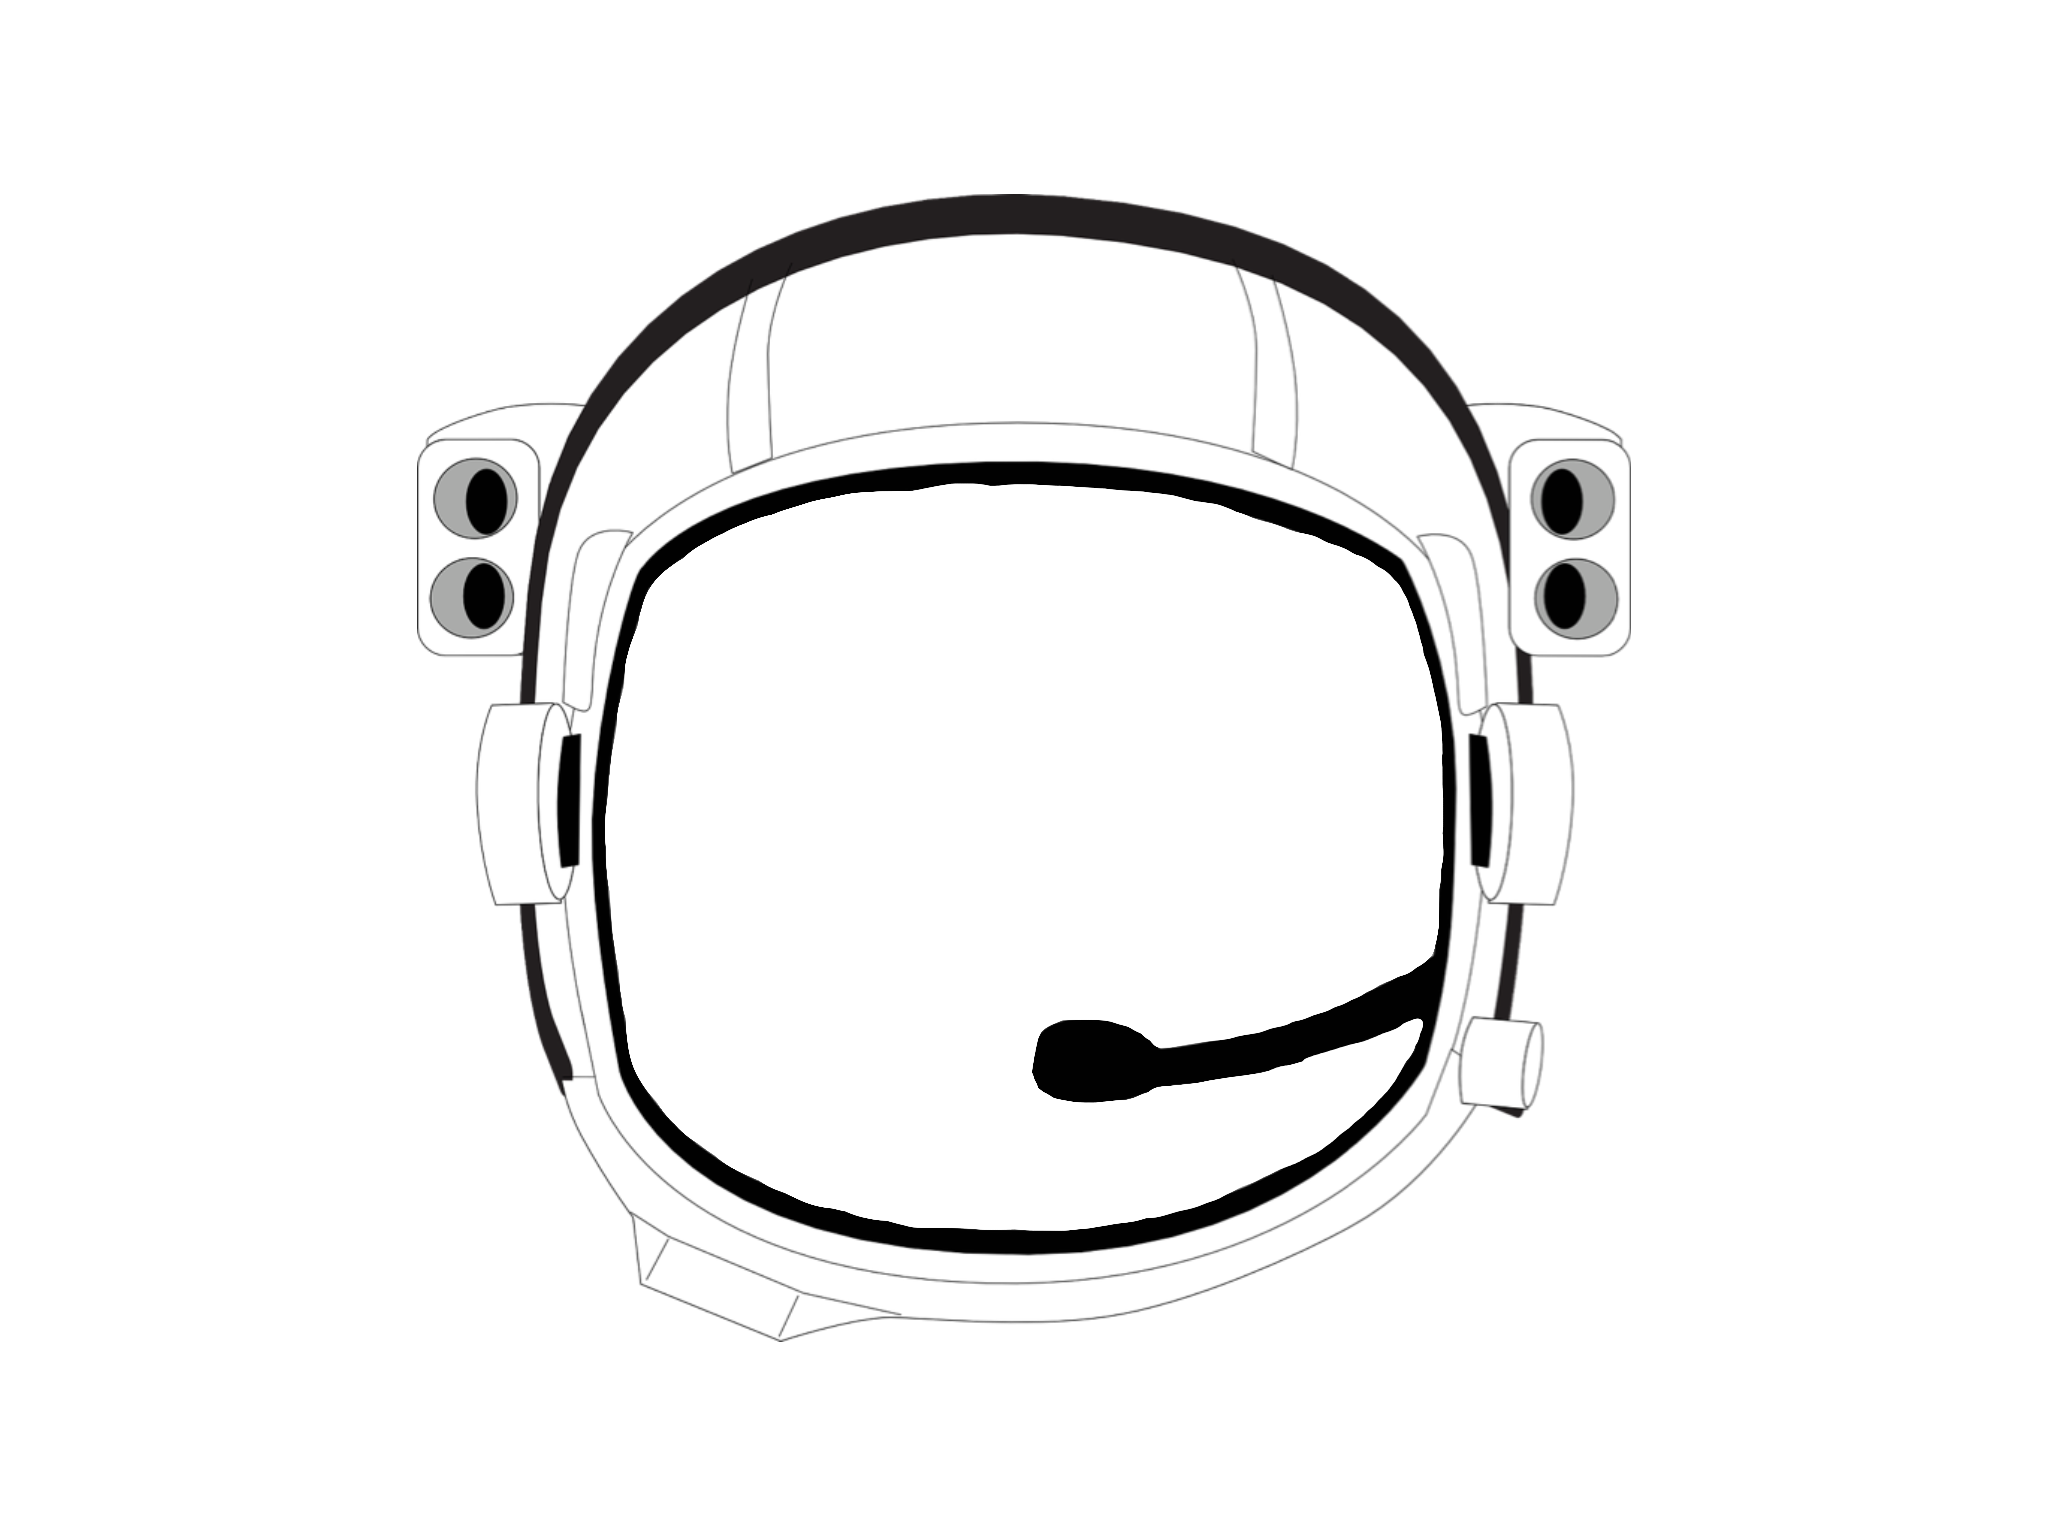 Шаблон шлема космонавта для фотосессии. Шлем Космонавта. Шлем от скафандра. Маска космический шлем. Маска скафандр.